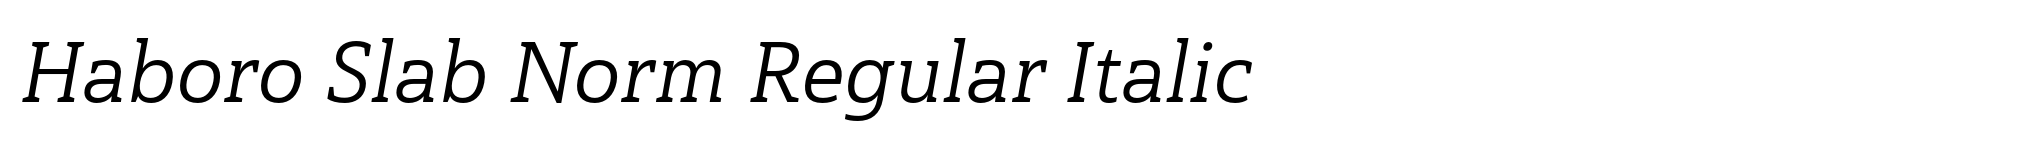 Haboro Slab Norm Regular Italic image